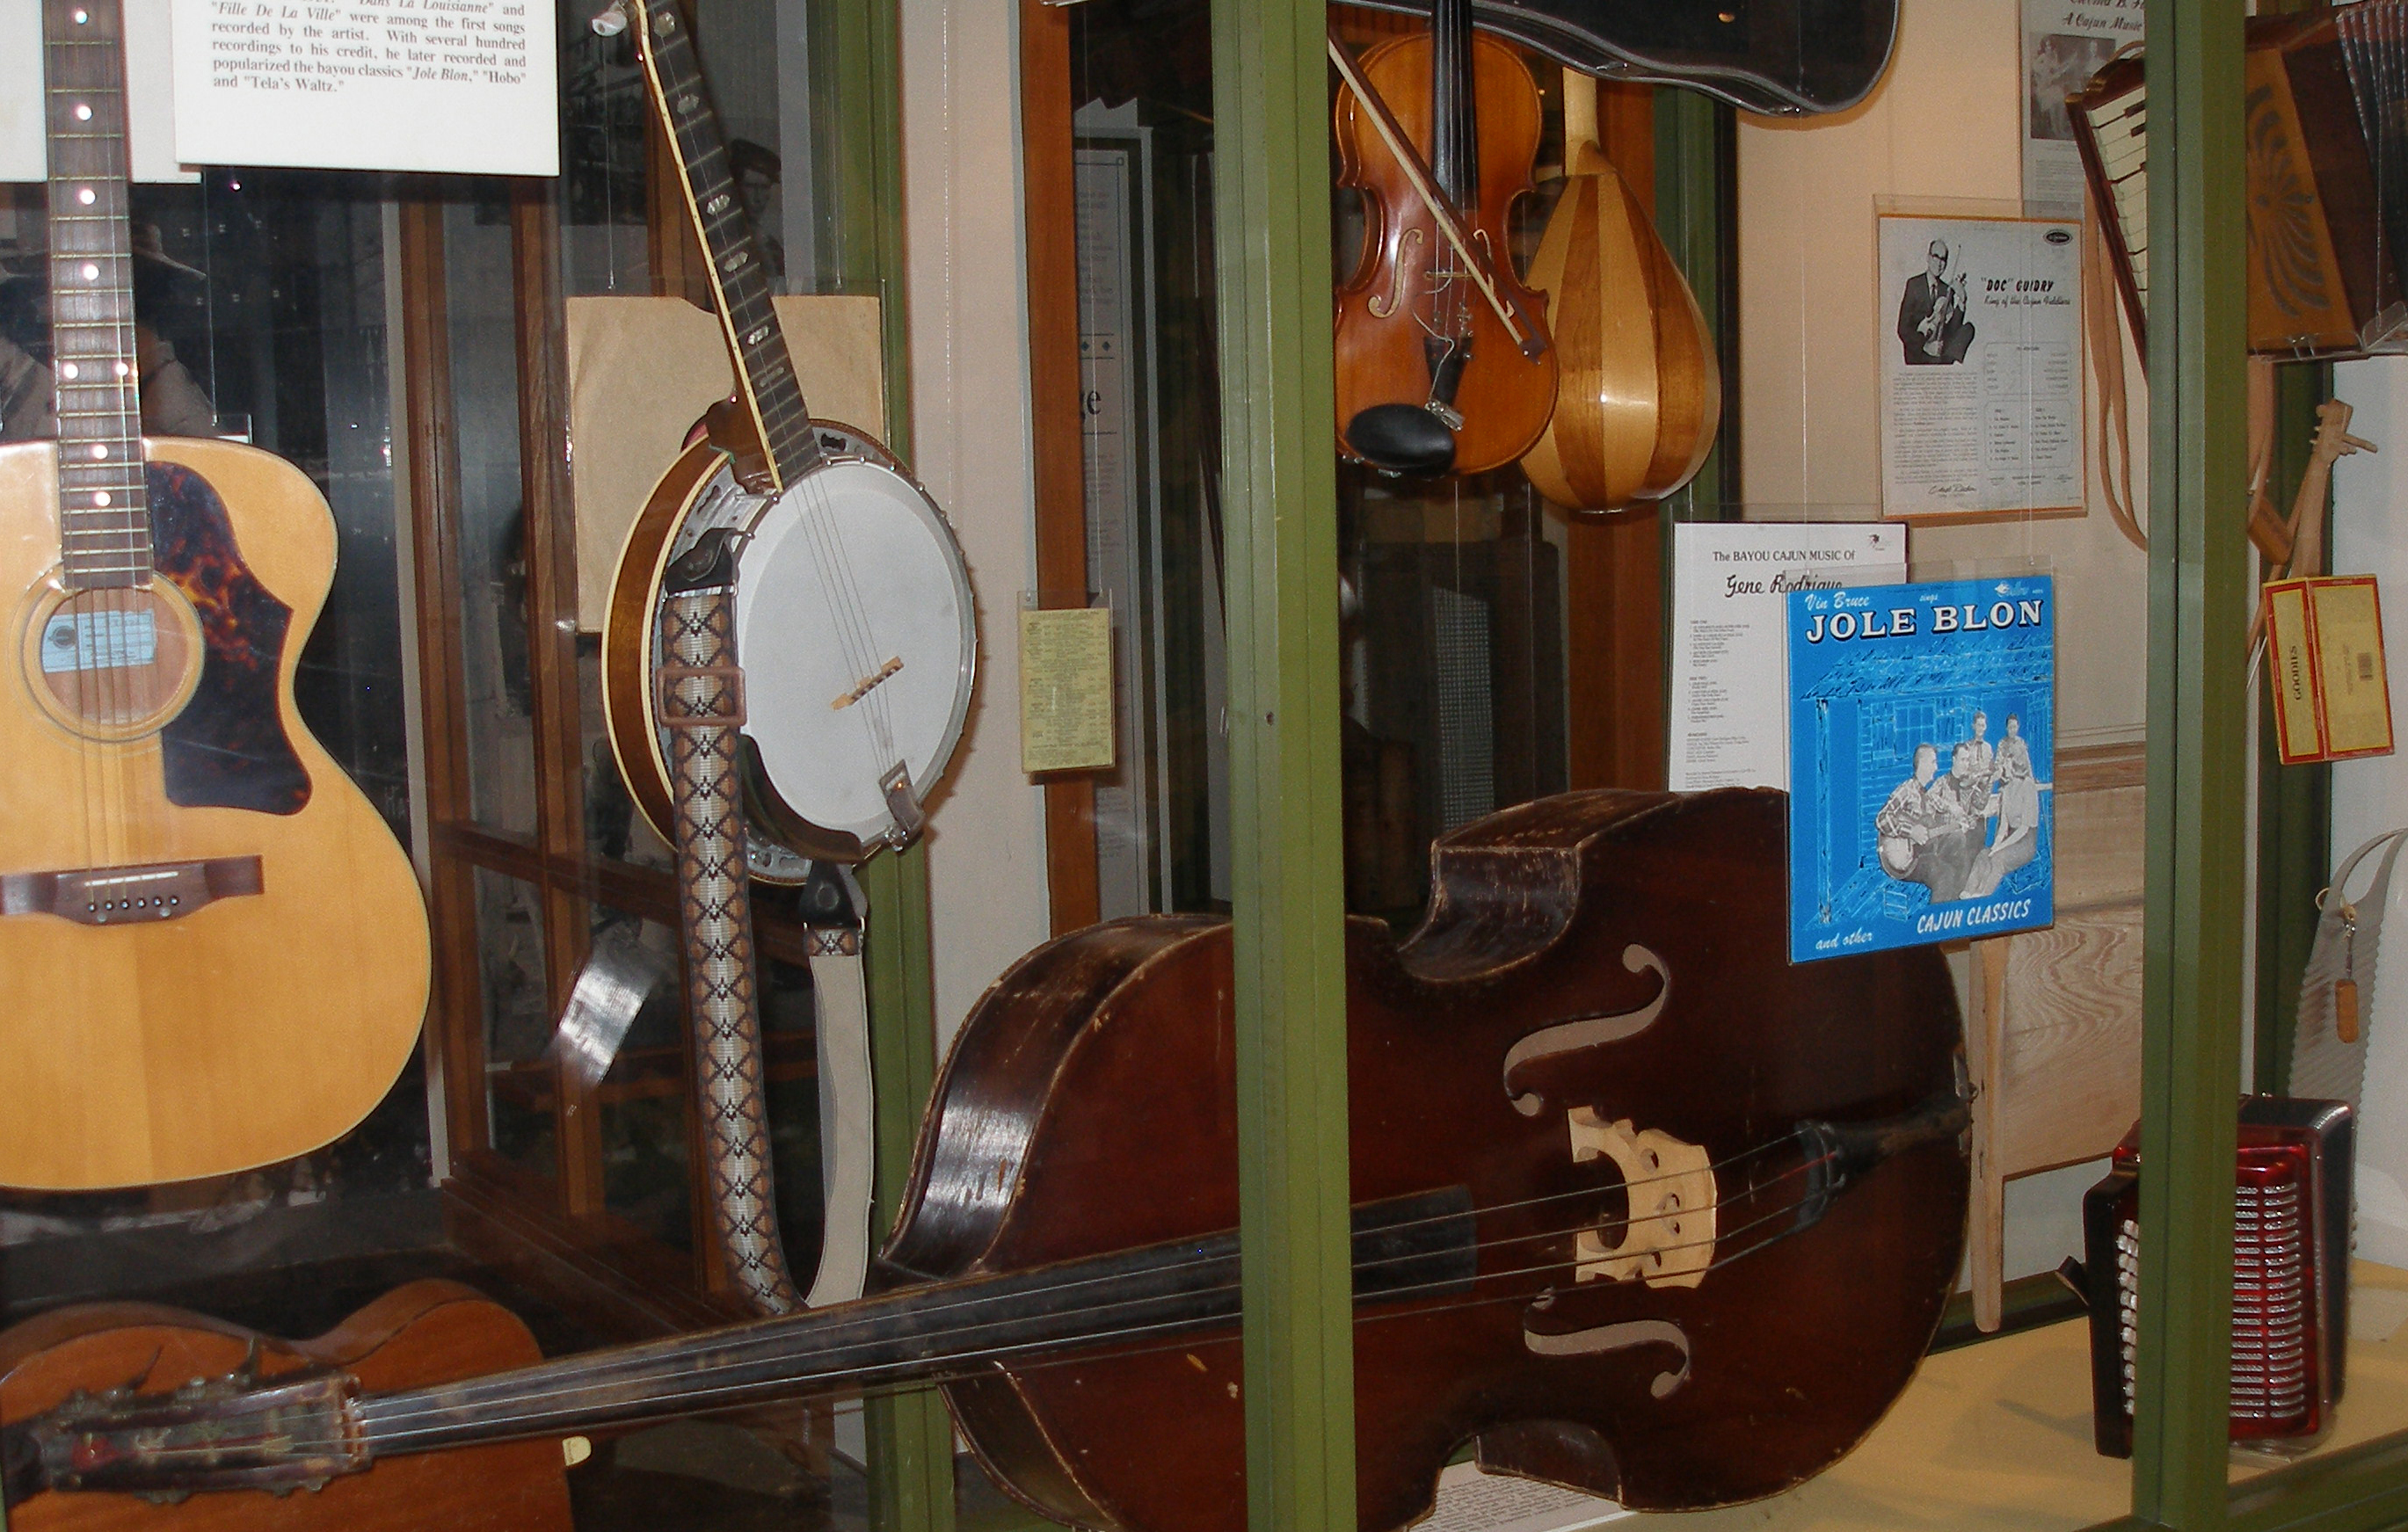 Exhibit case full of musical instruments